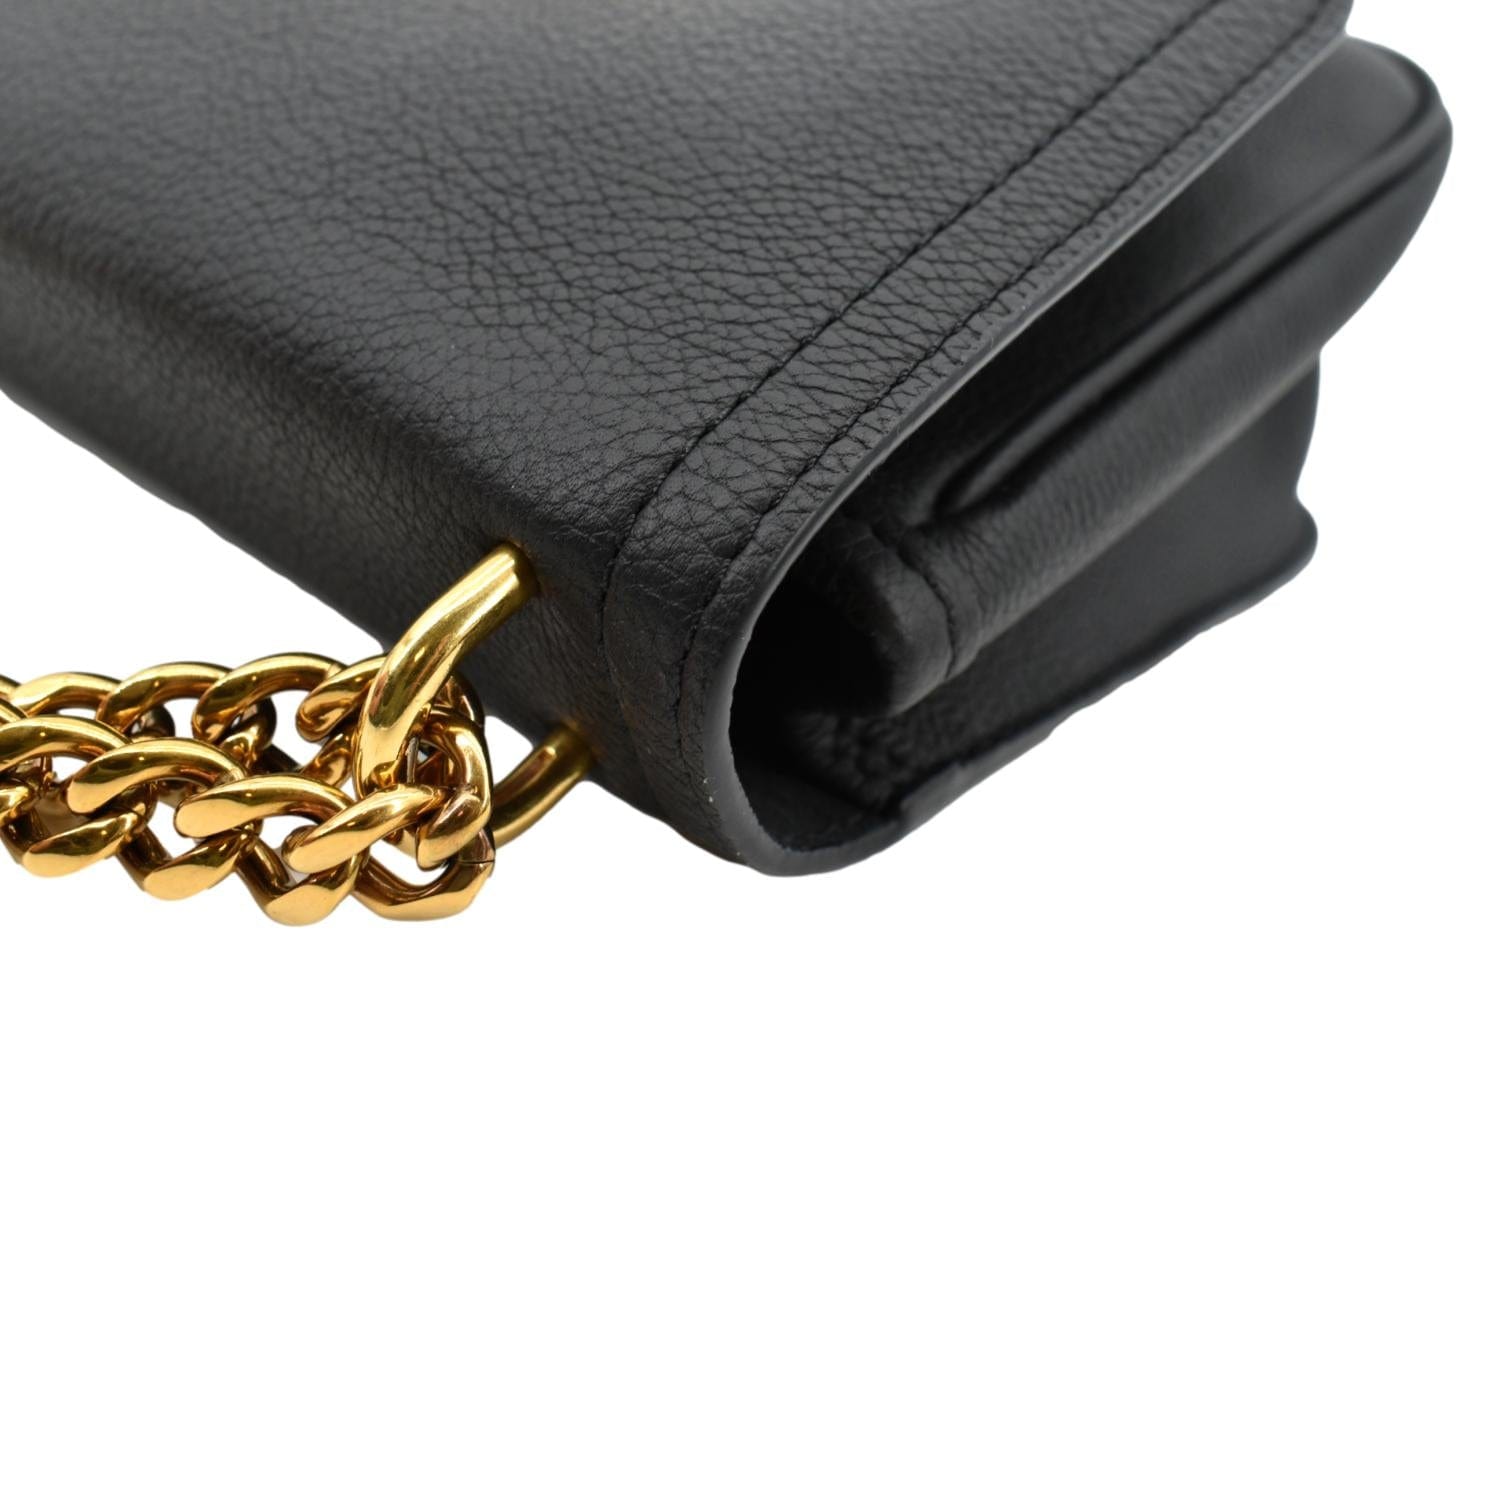 black louis vuitton purse with gold chain